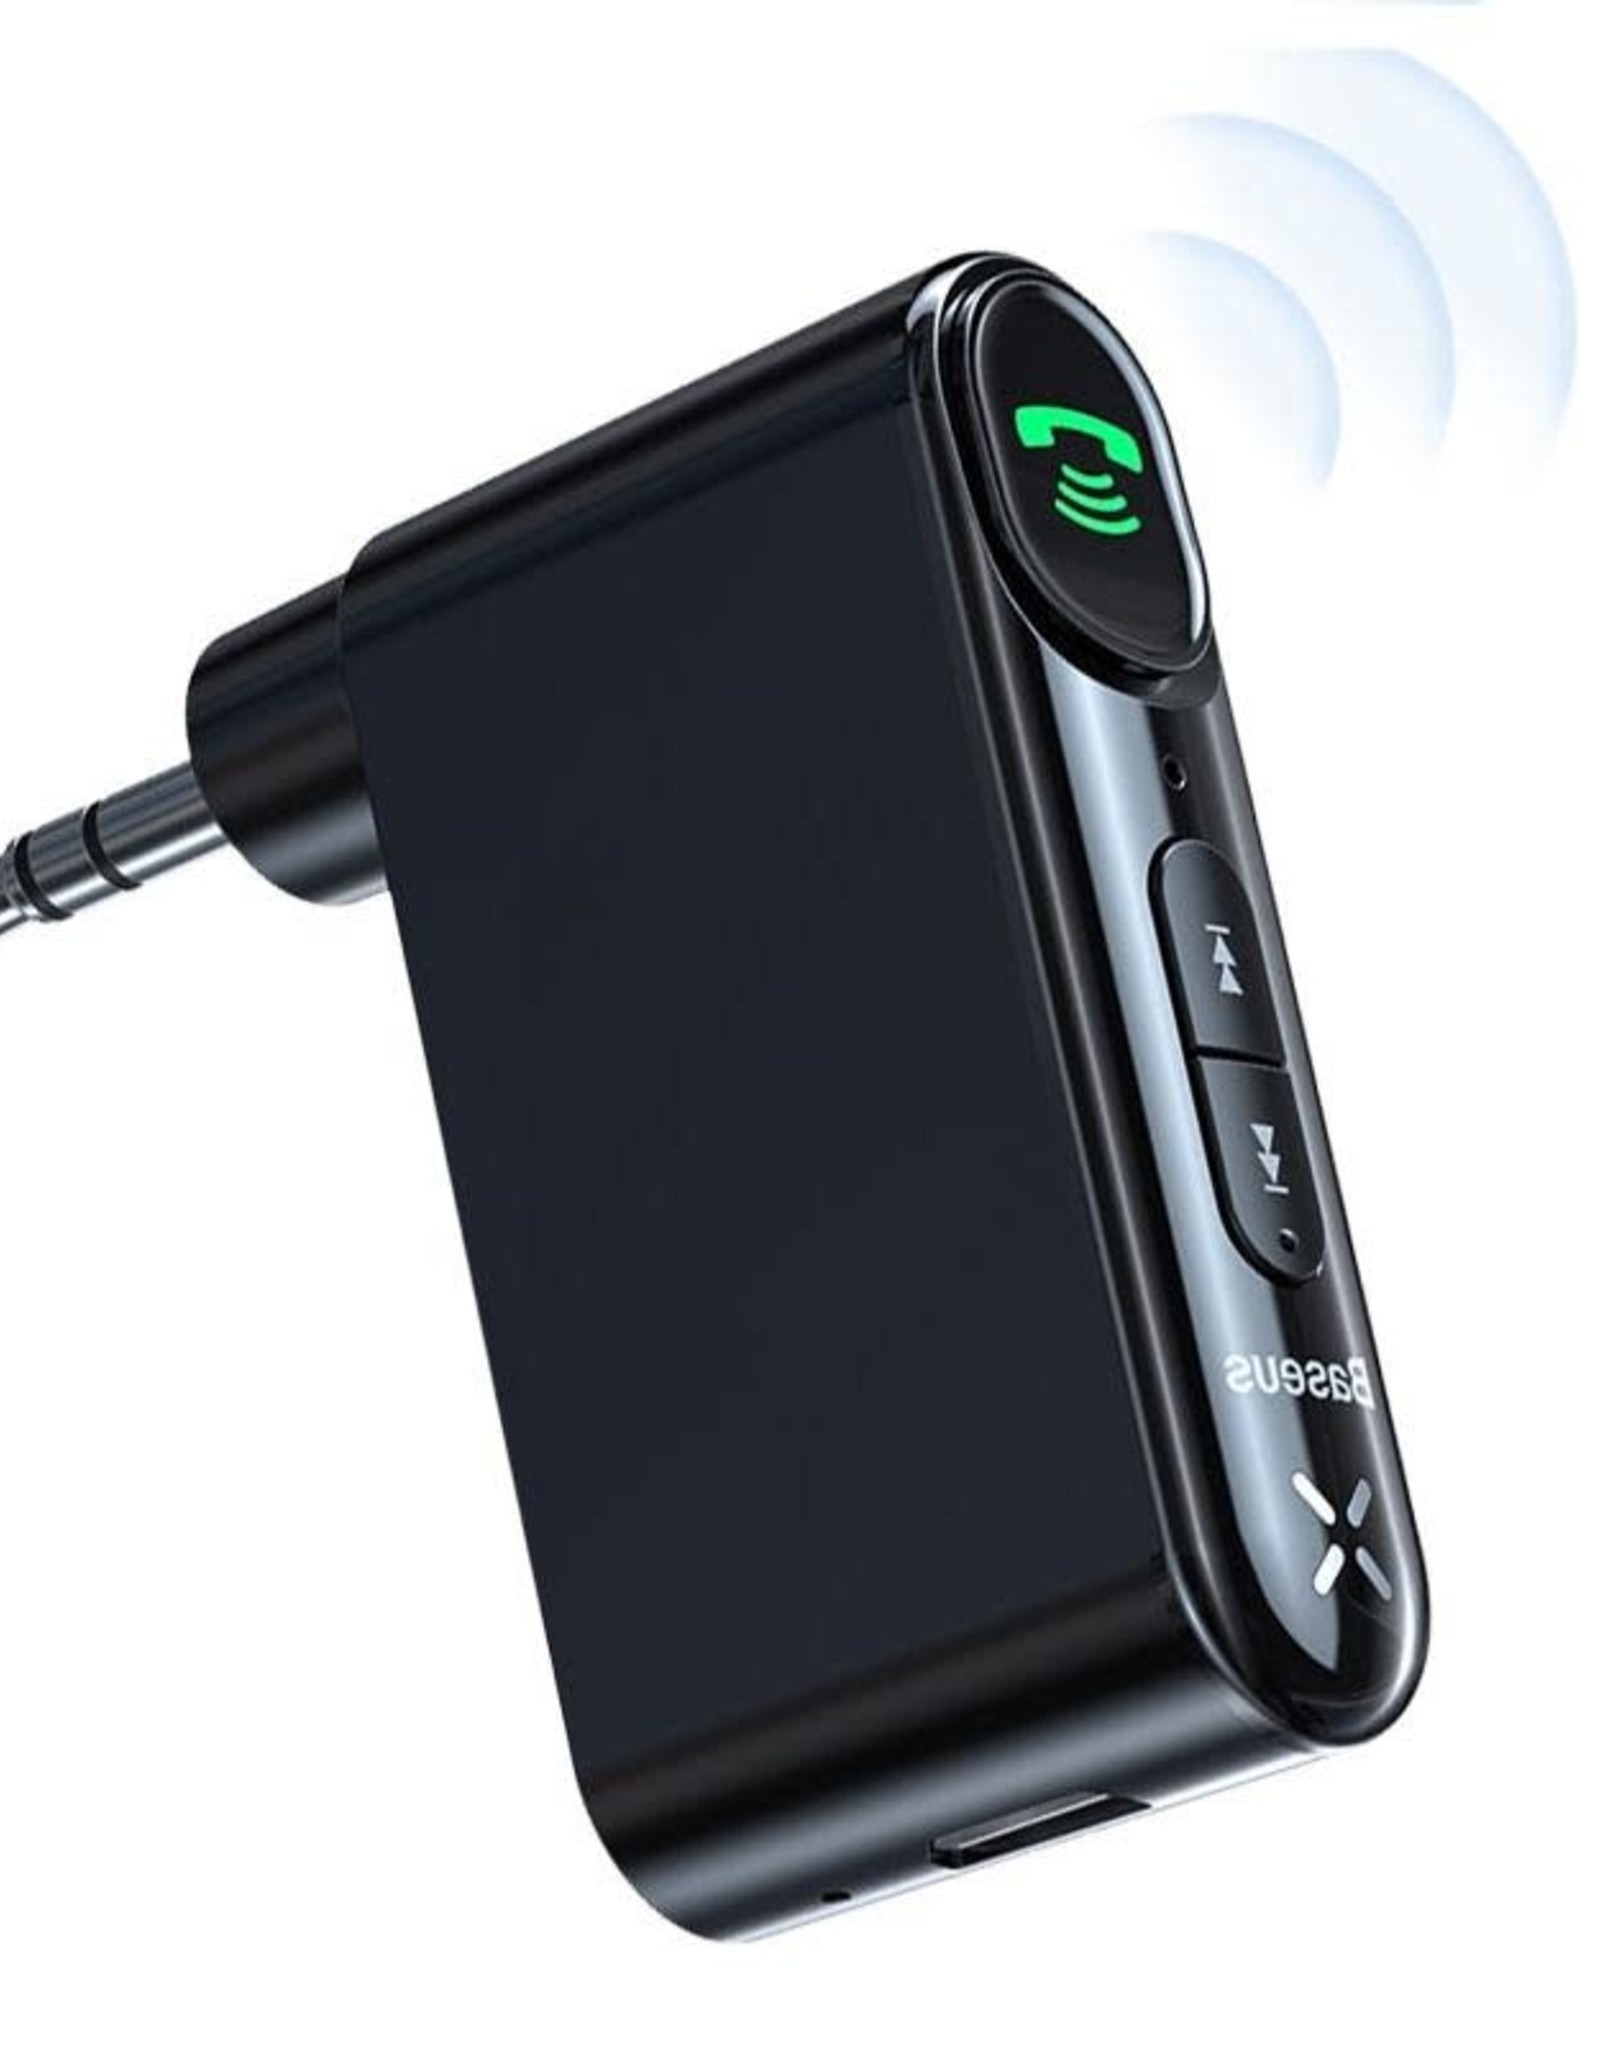 BASEUS Wireless Bluetooth Car Kit Hands Free 3.5mm Jack AUX Audio Receiver Adapter